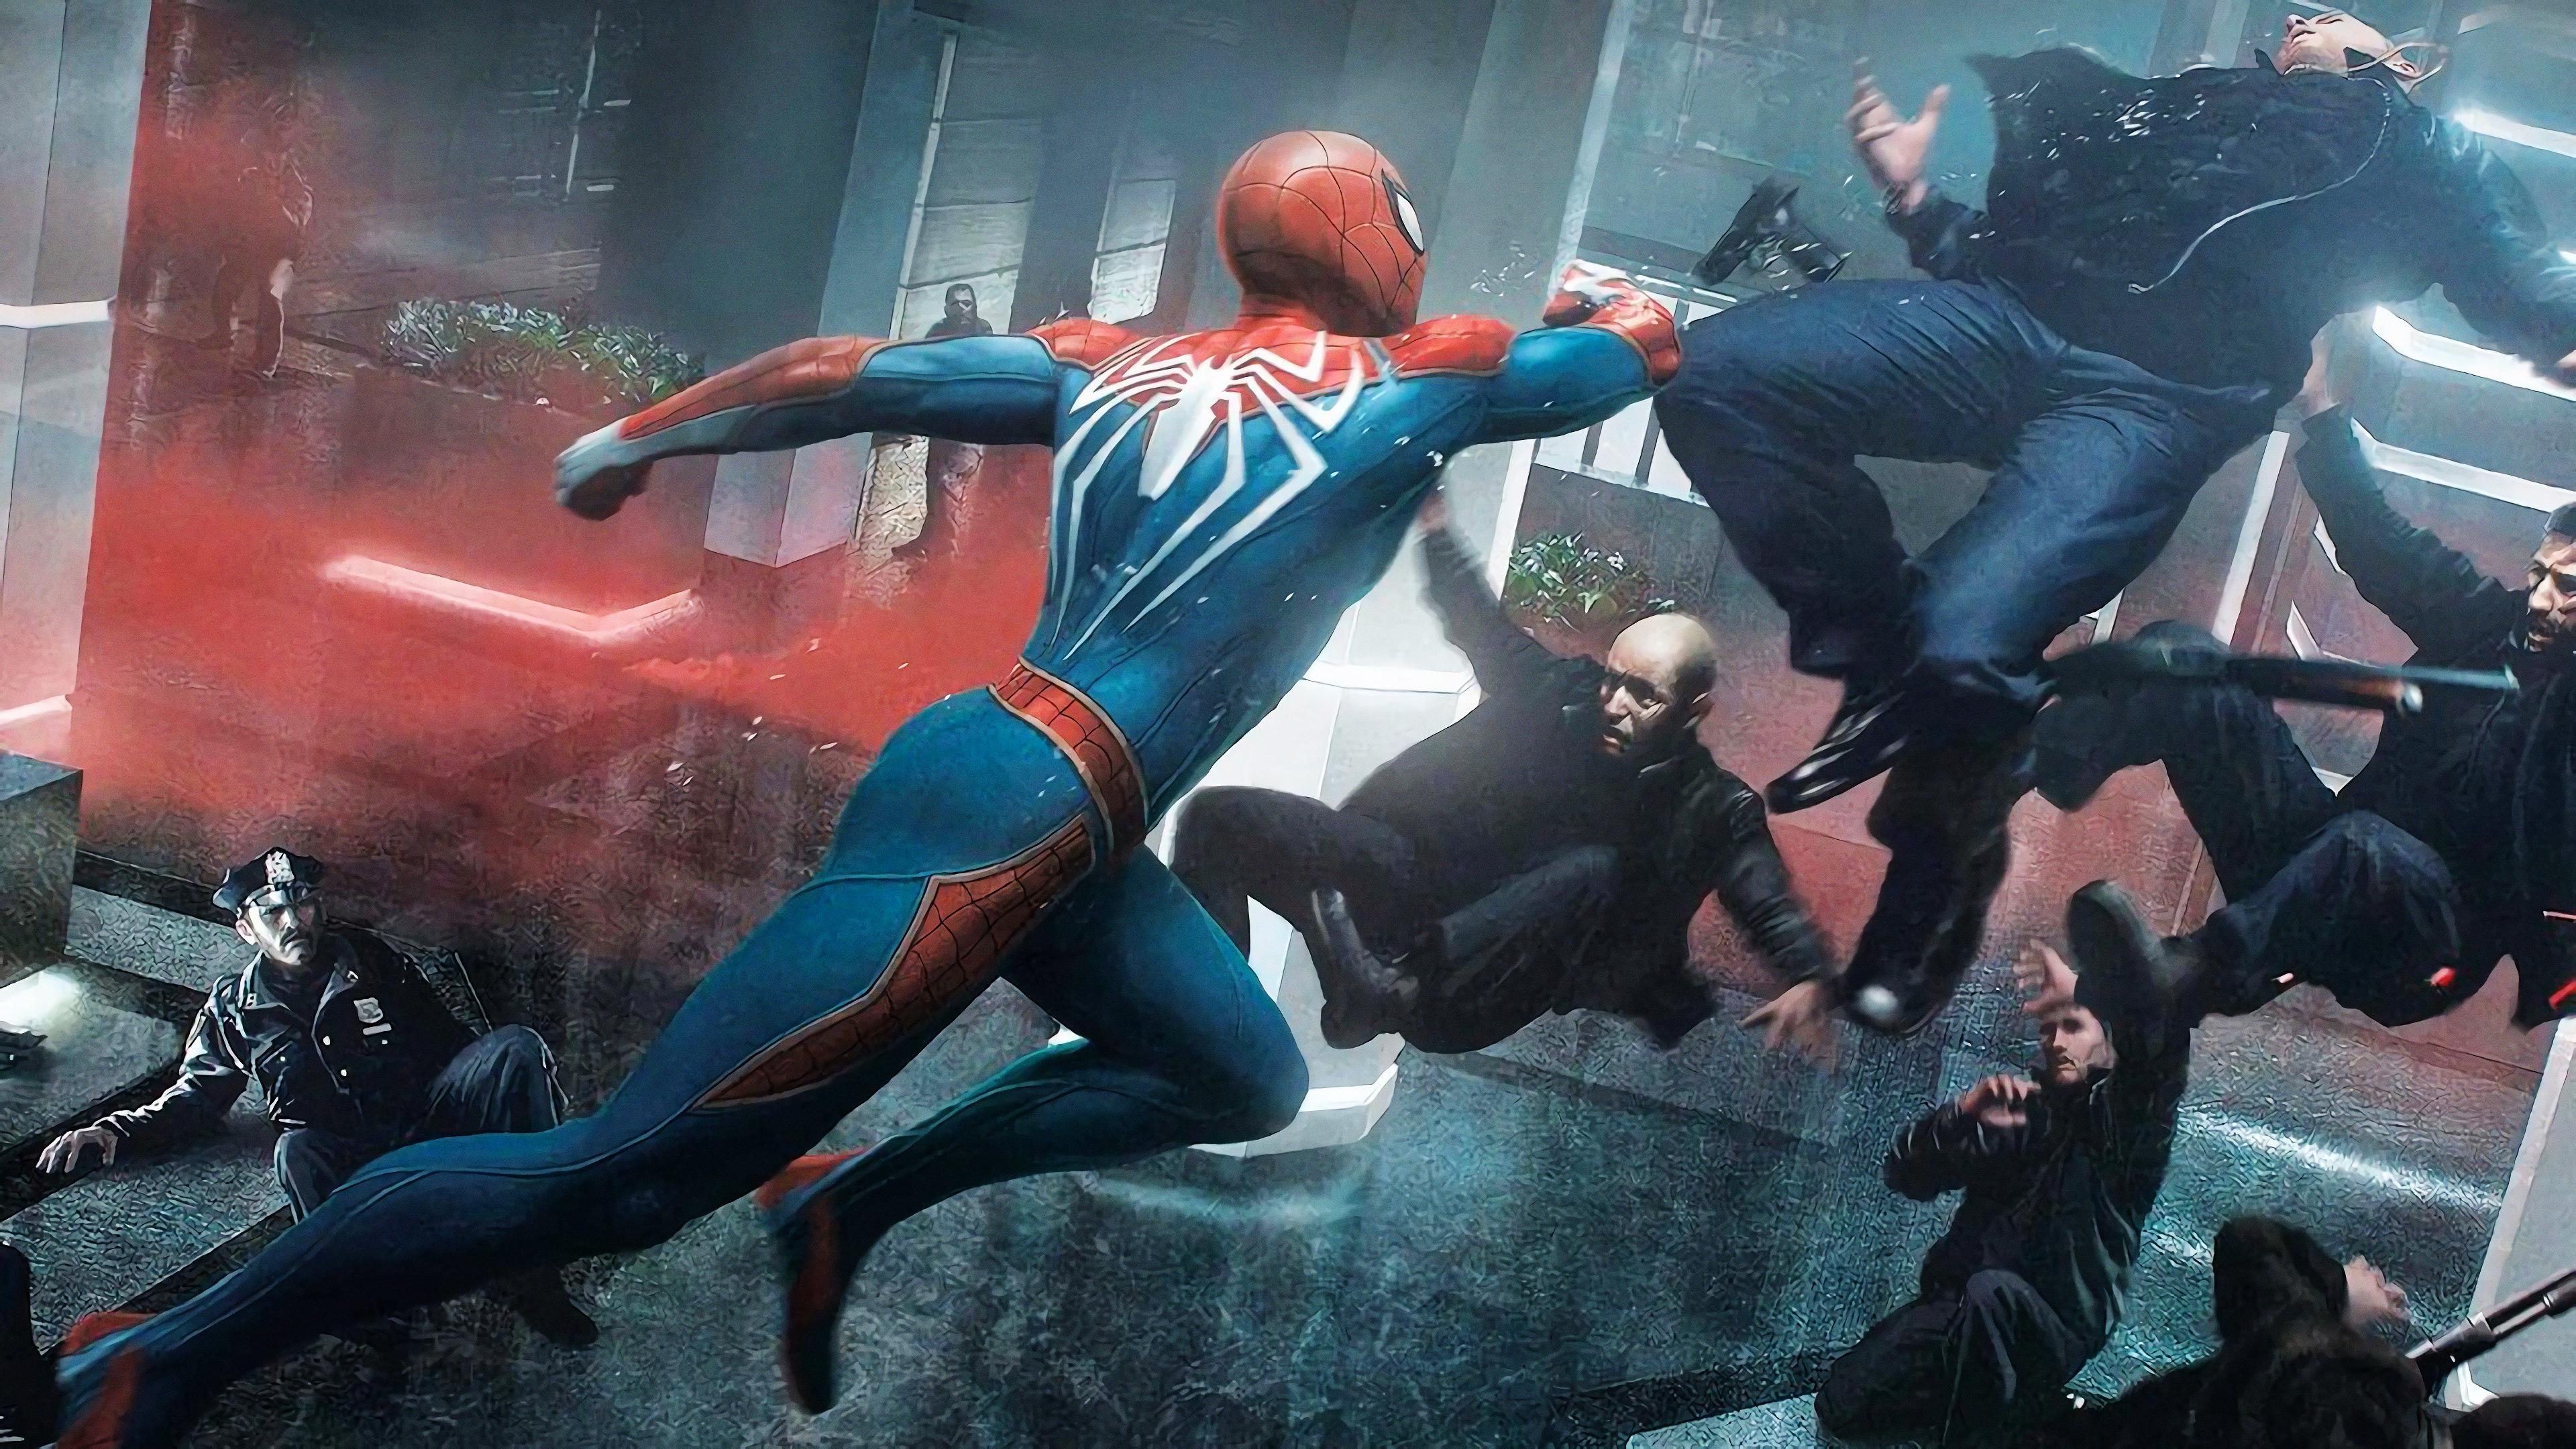 Spider Man (PS4) Spider Man Fight 4k Ultra HD Wallpaper. Background